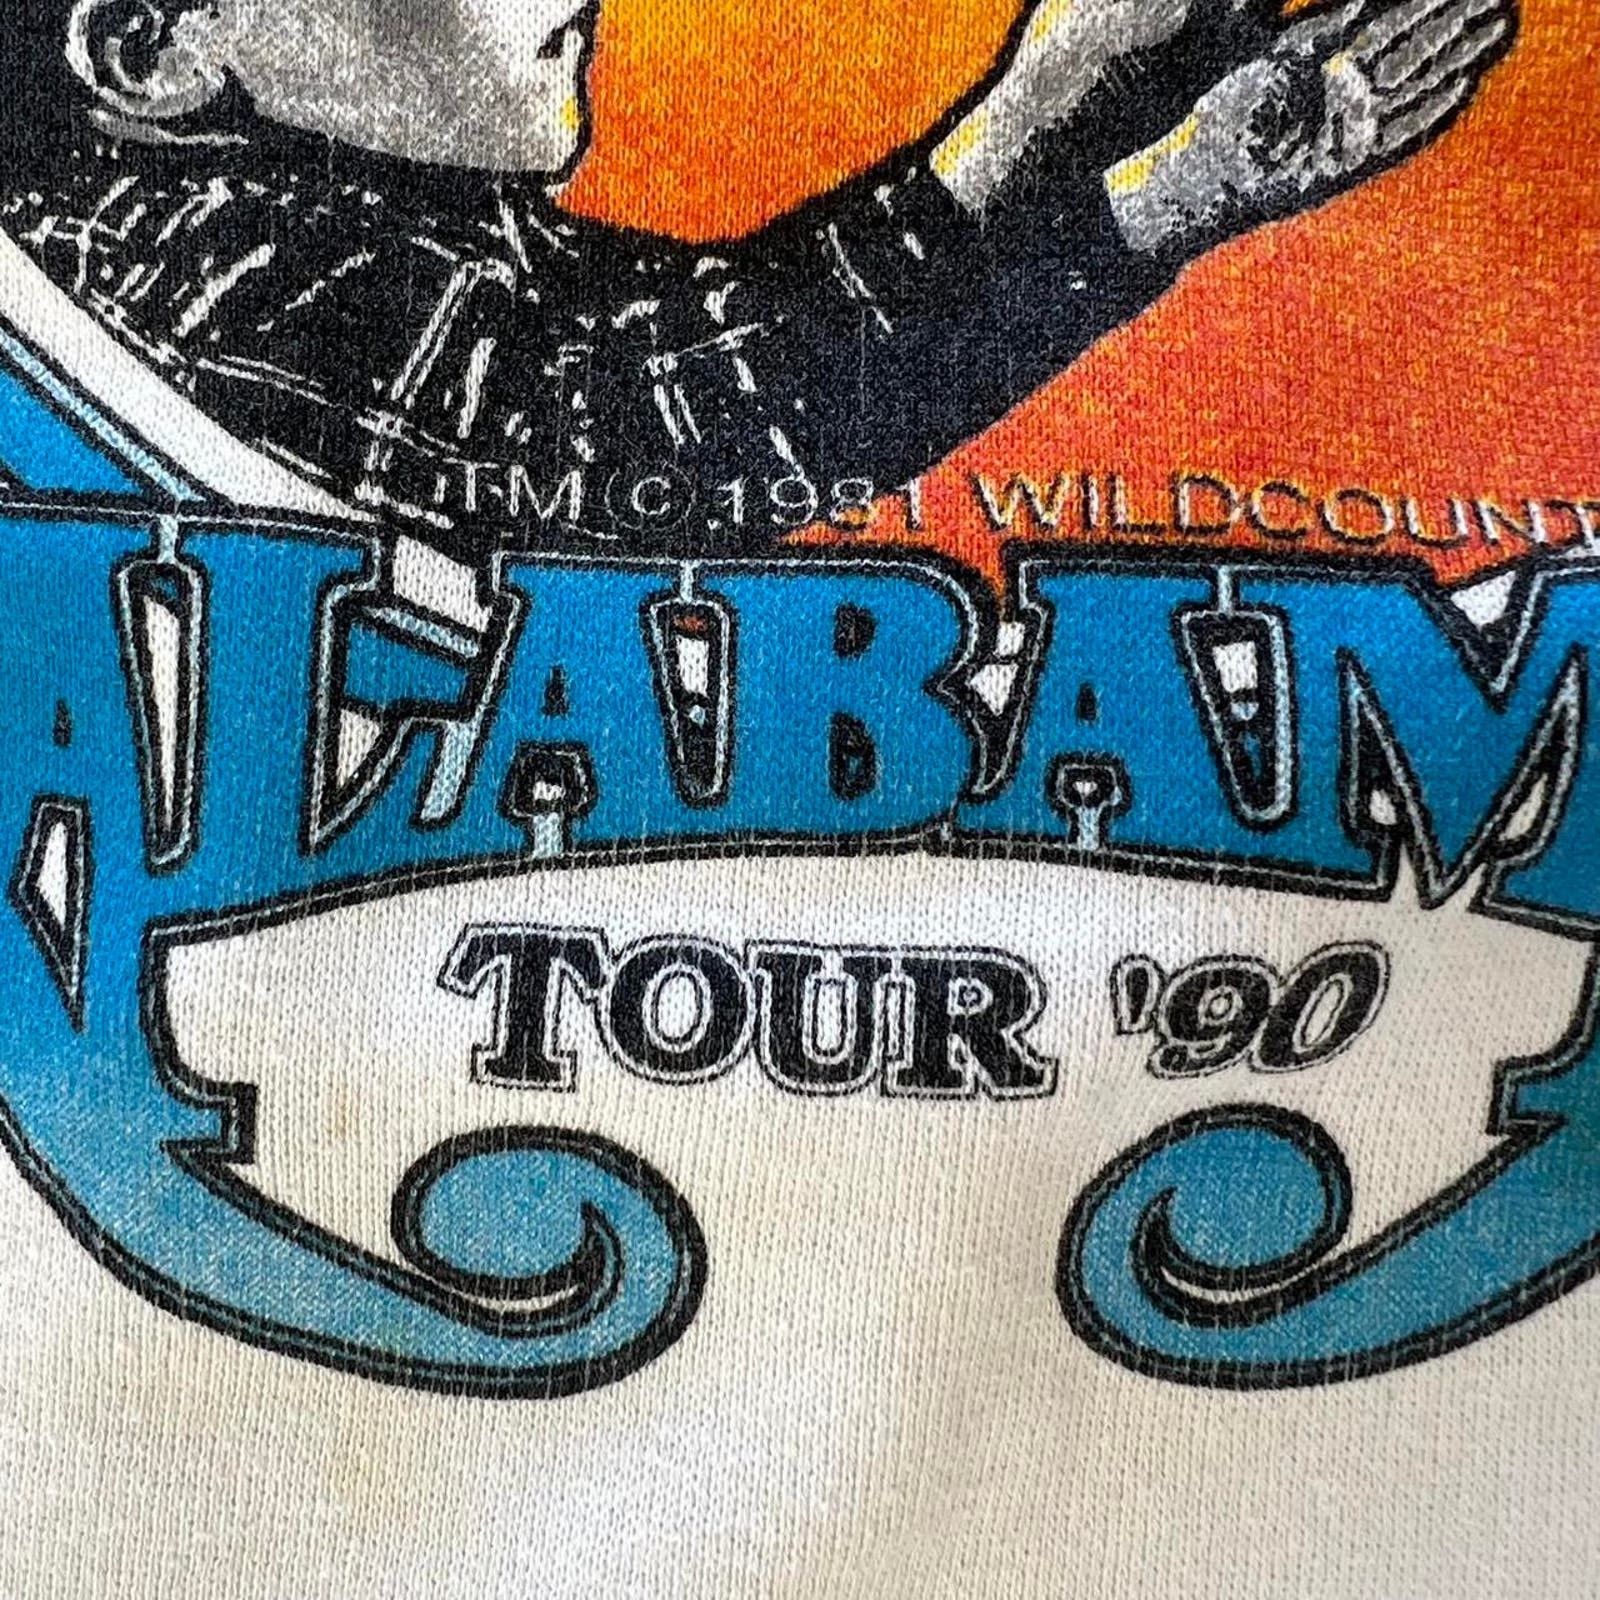 Vintage Vintage 90s Pass it on Down Alabama 1990 Tour Band Crewneck Size US XL / EU 56 / 4 - 5 Thumbnail